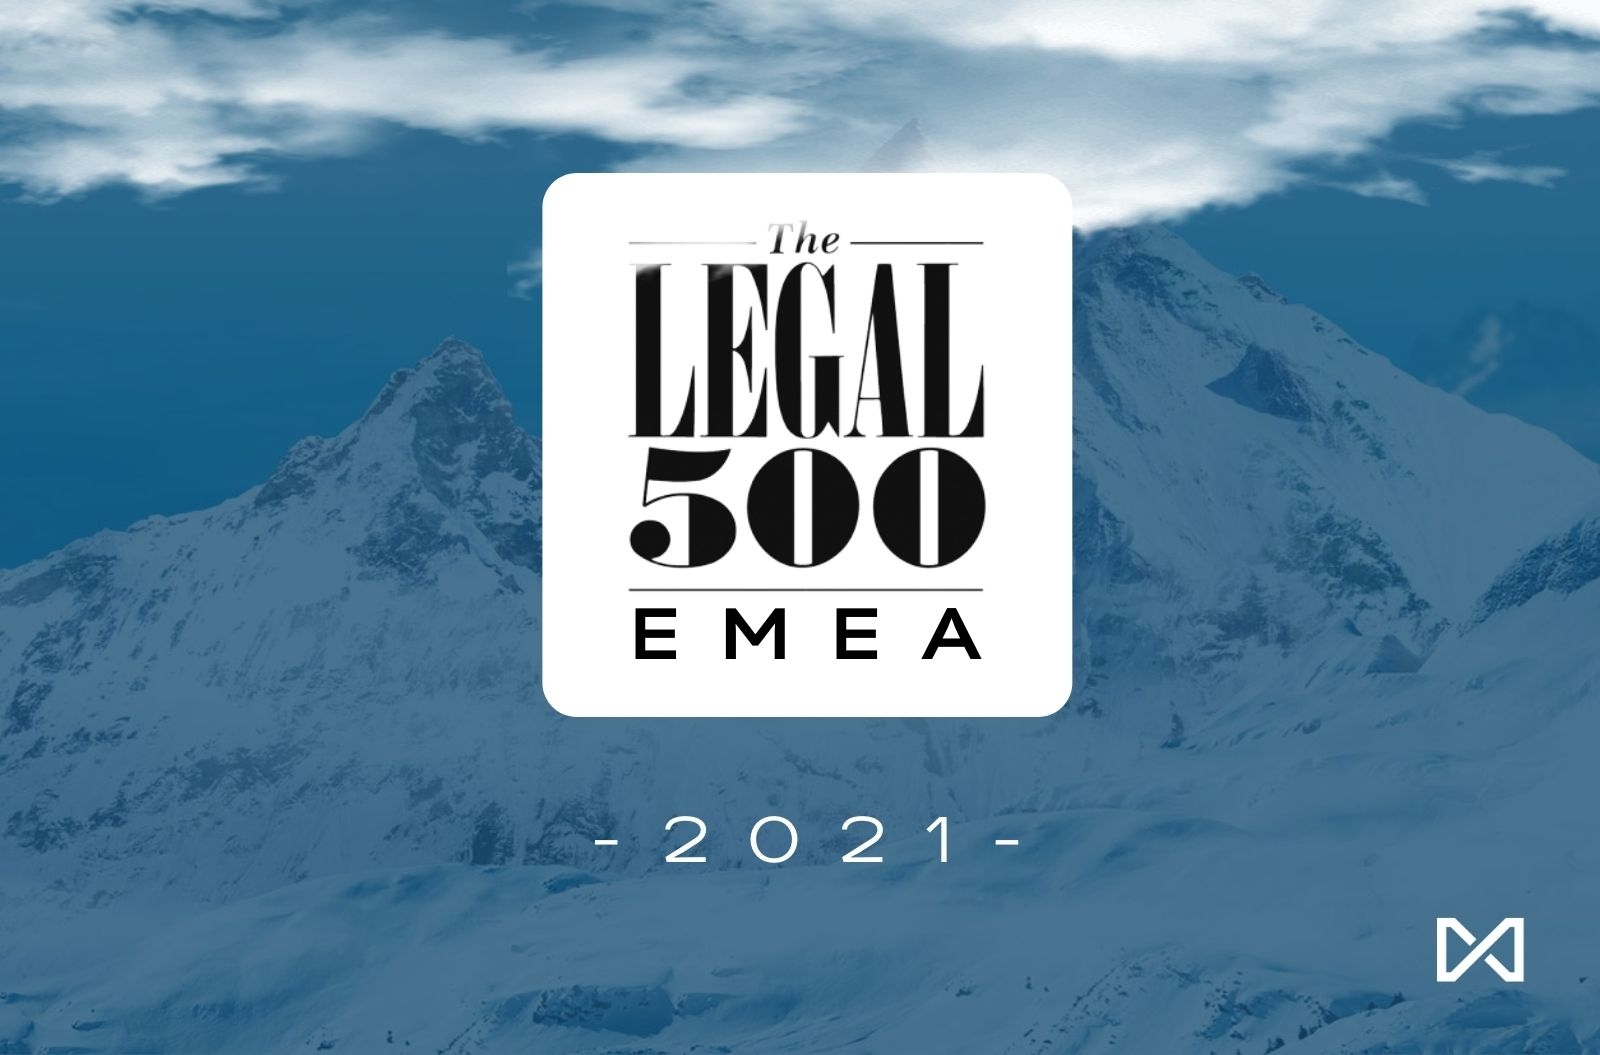 EVERLEGAL in the Legal 500 EMEA 2021 ranking